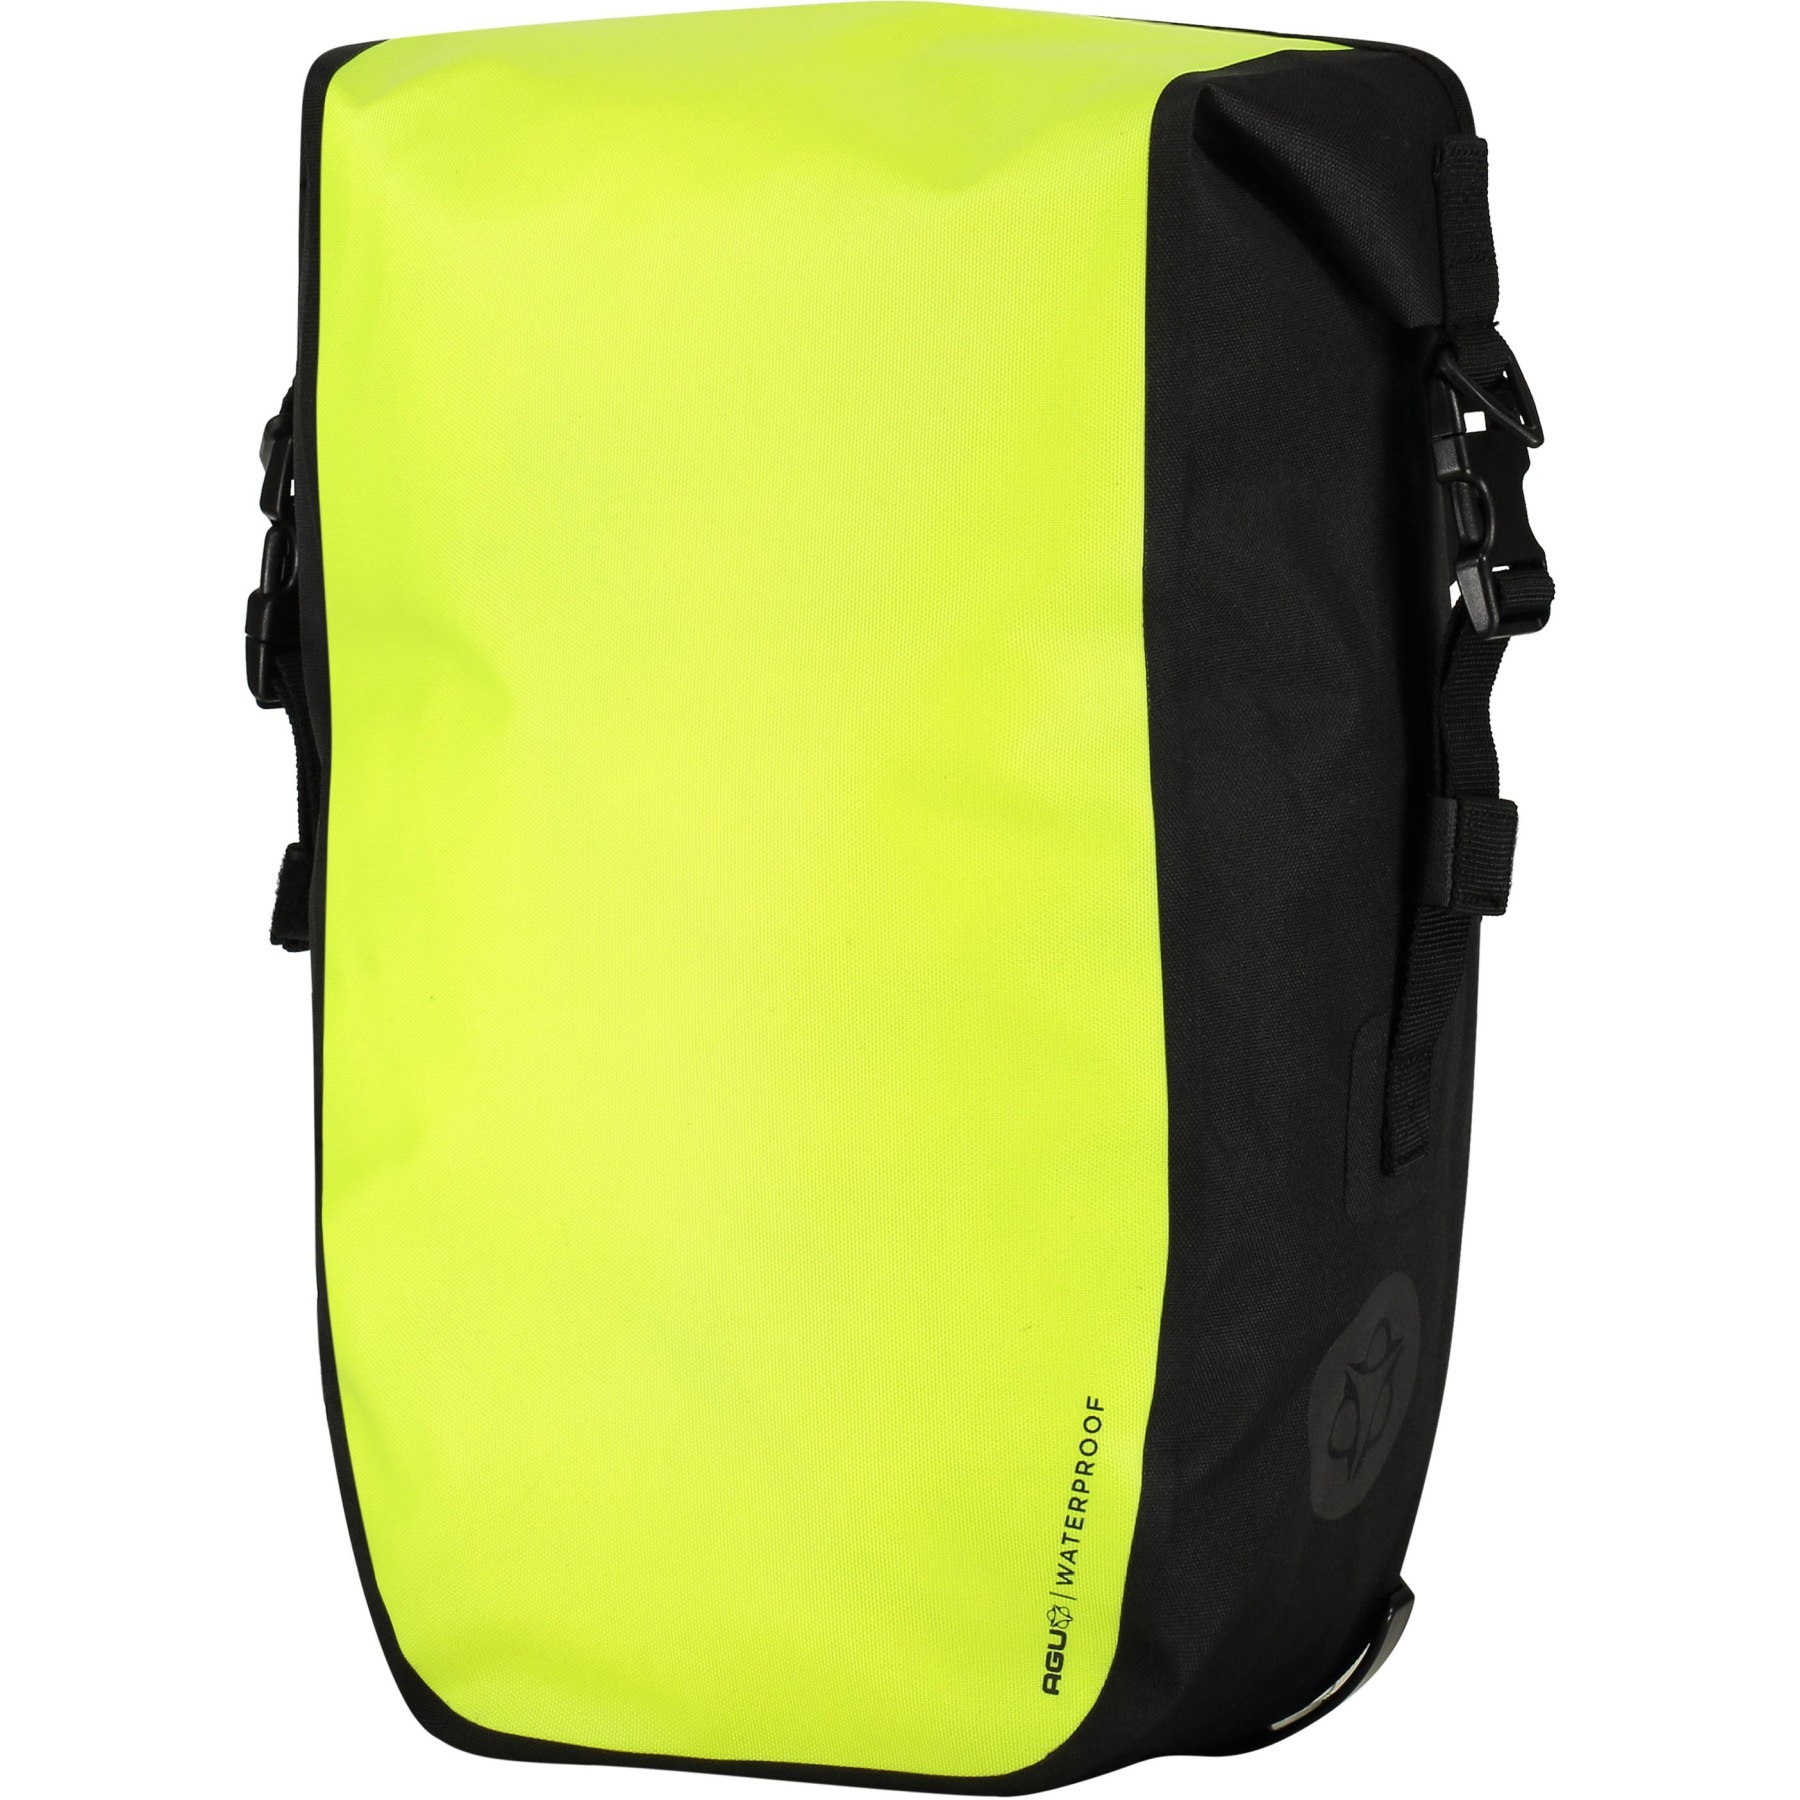 Image of AGU Shelter Clean Single Bike Bag - Medium - 17L - neon yellow